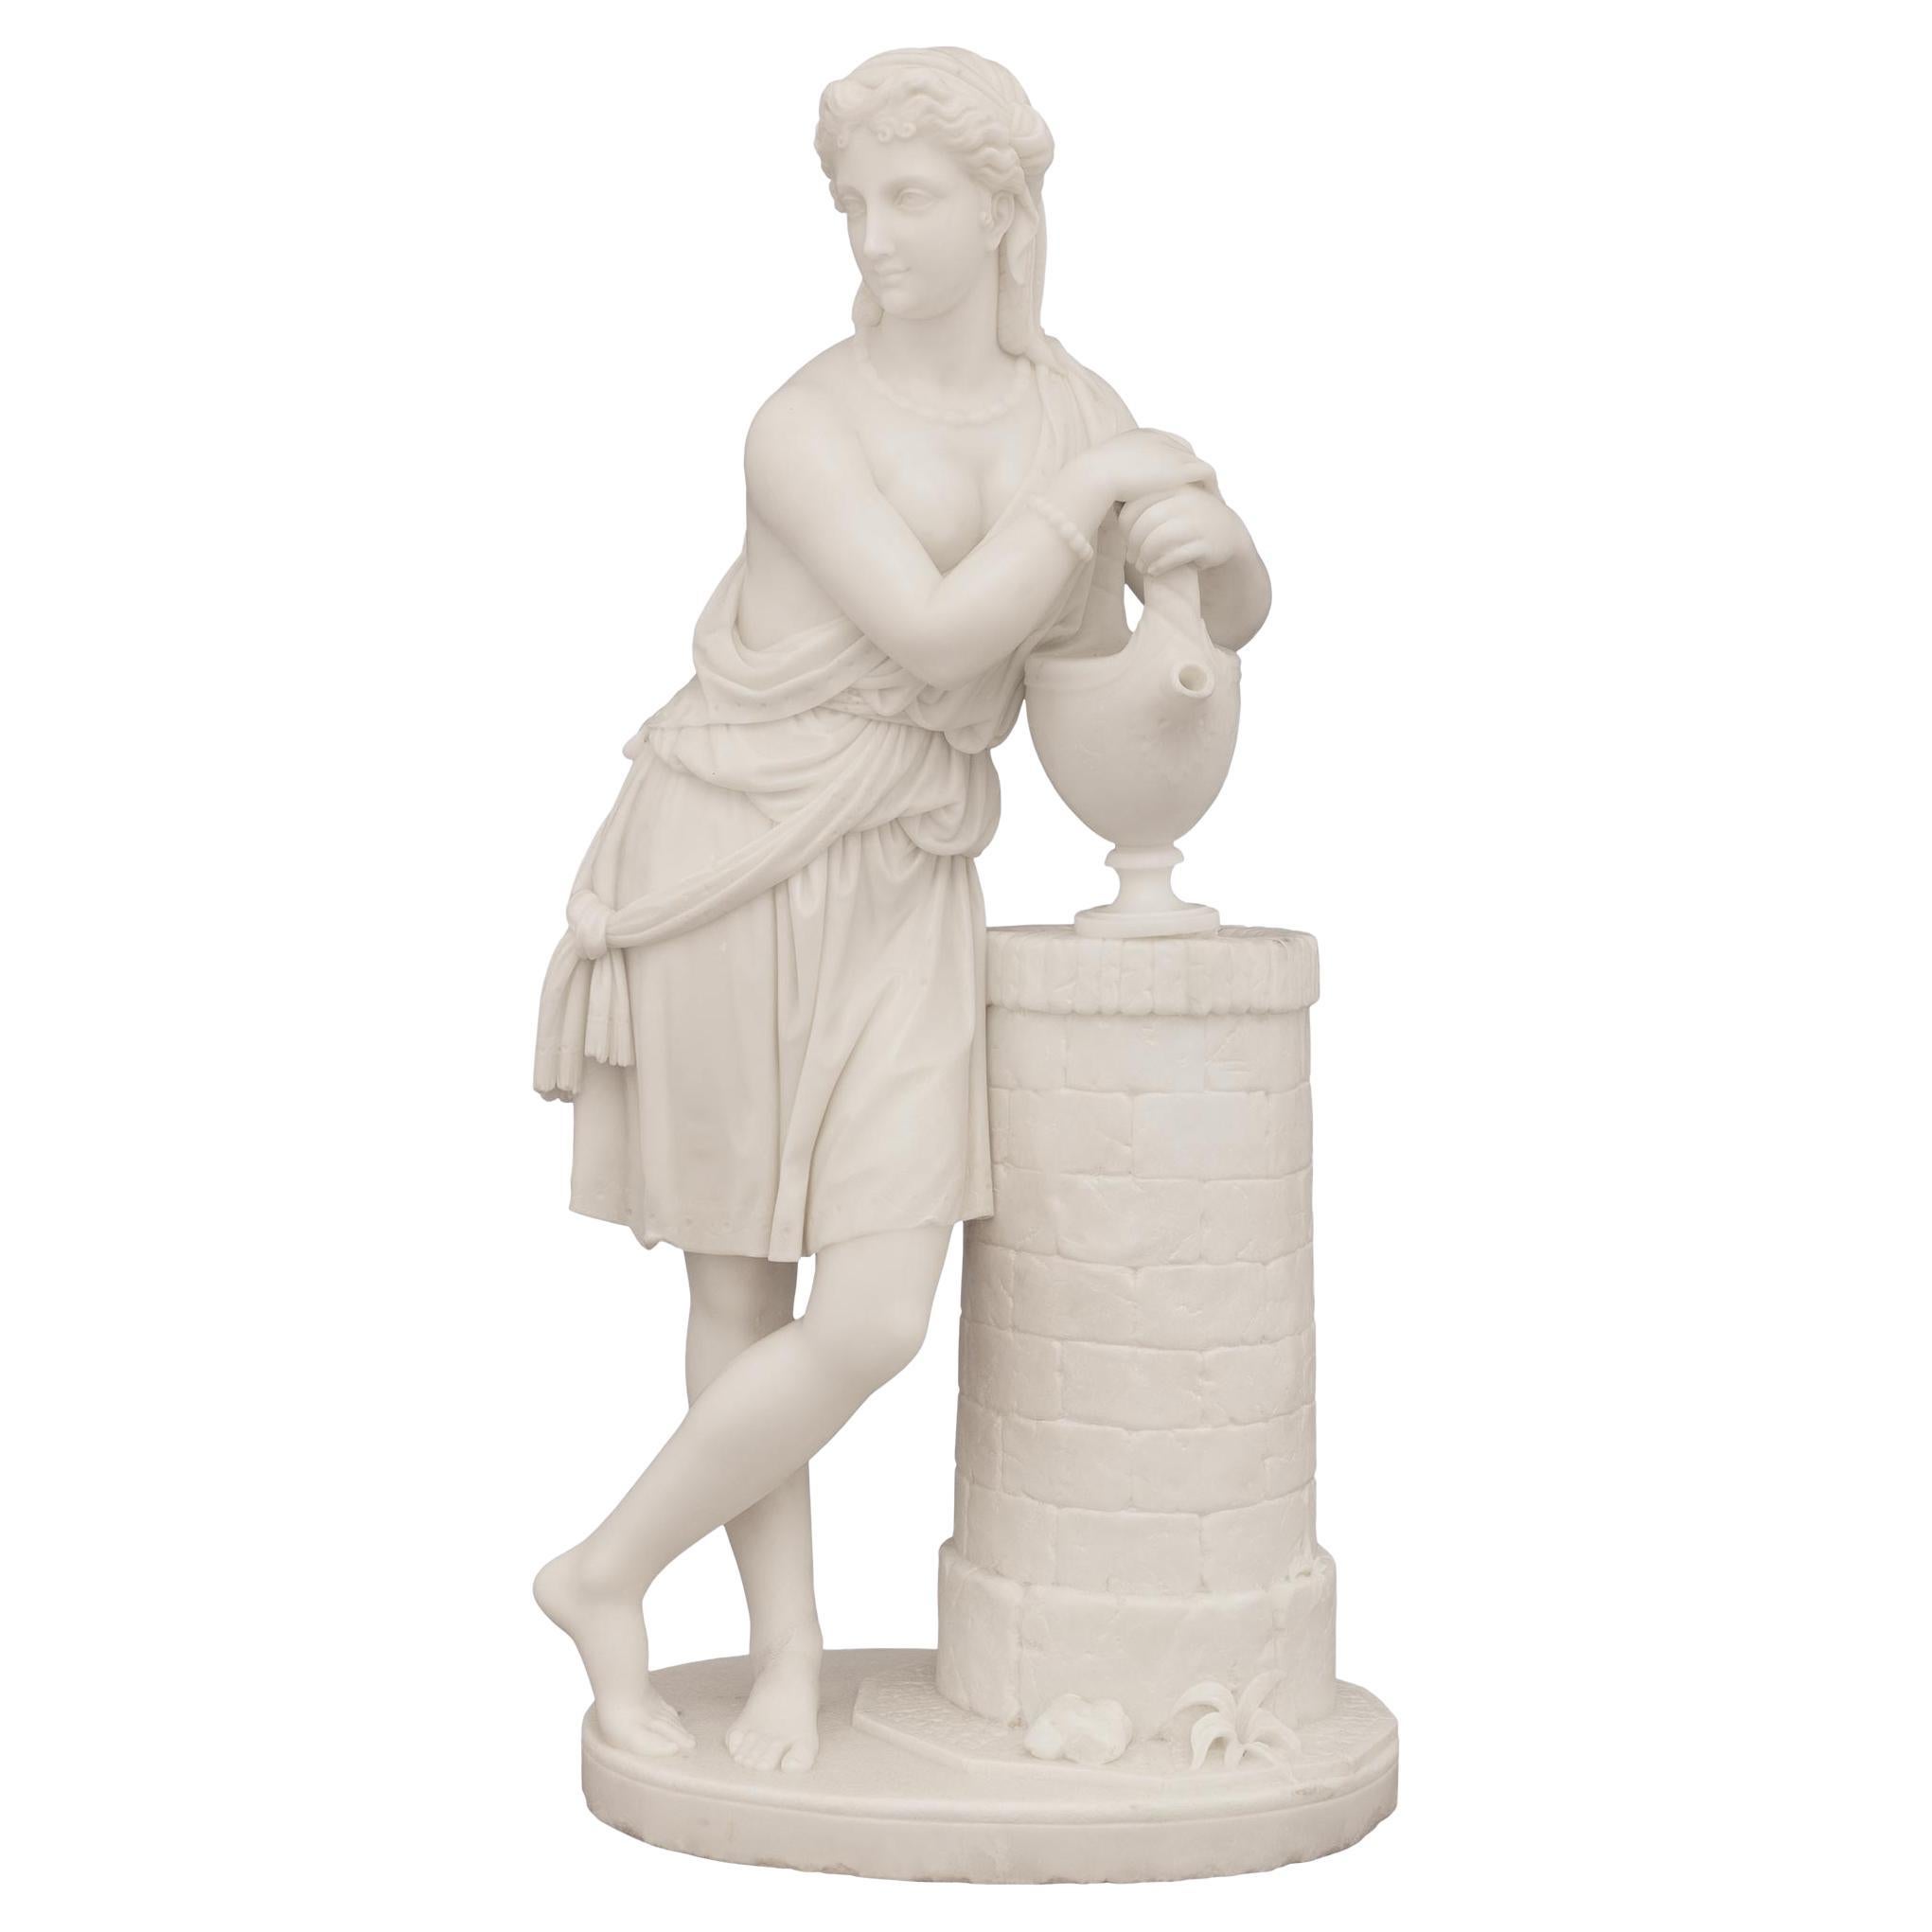 An Italian early 19th century marble statue by Carmelo Fontana